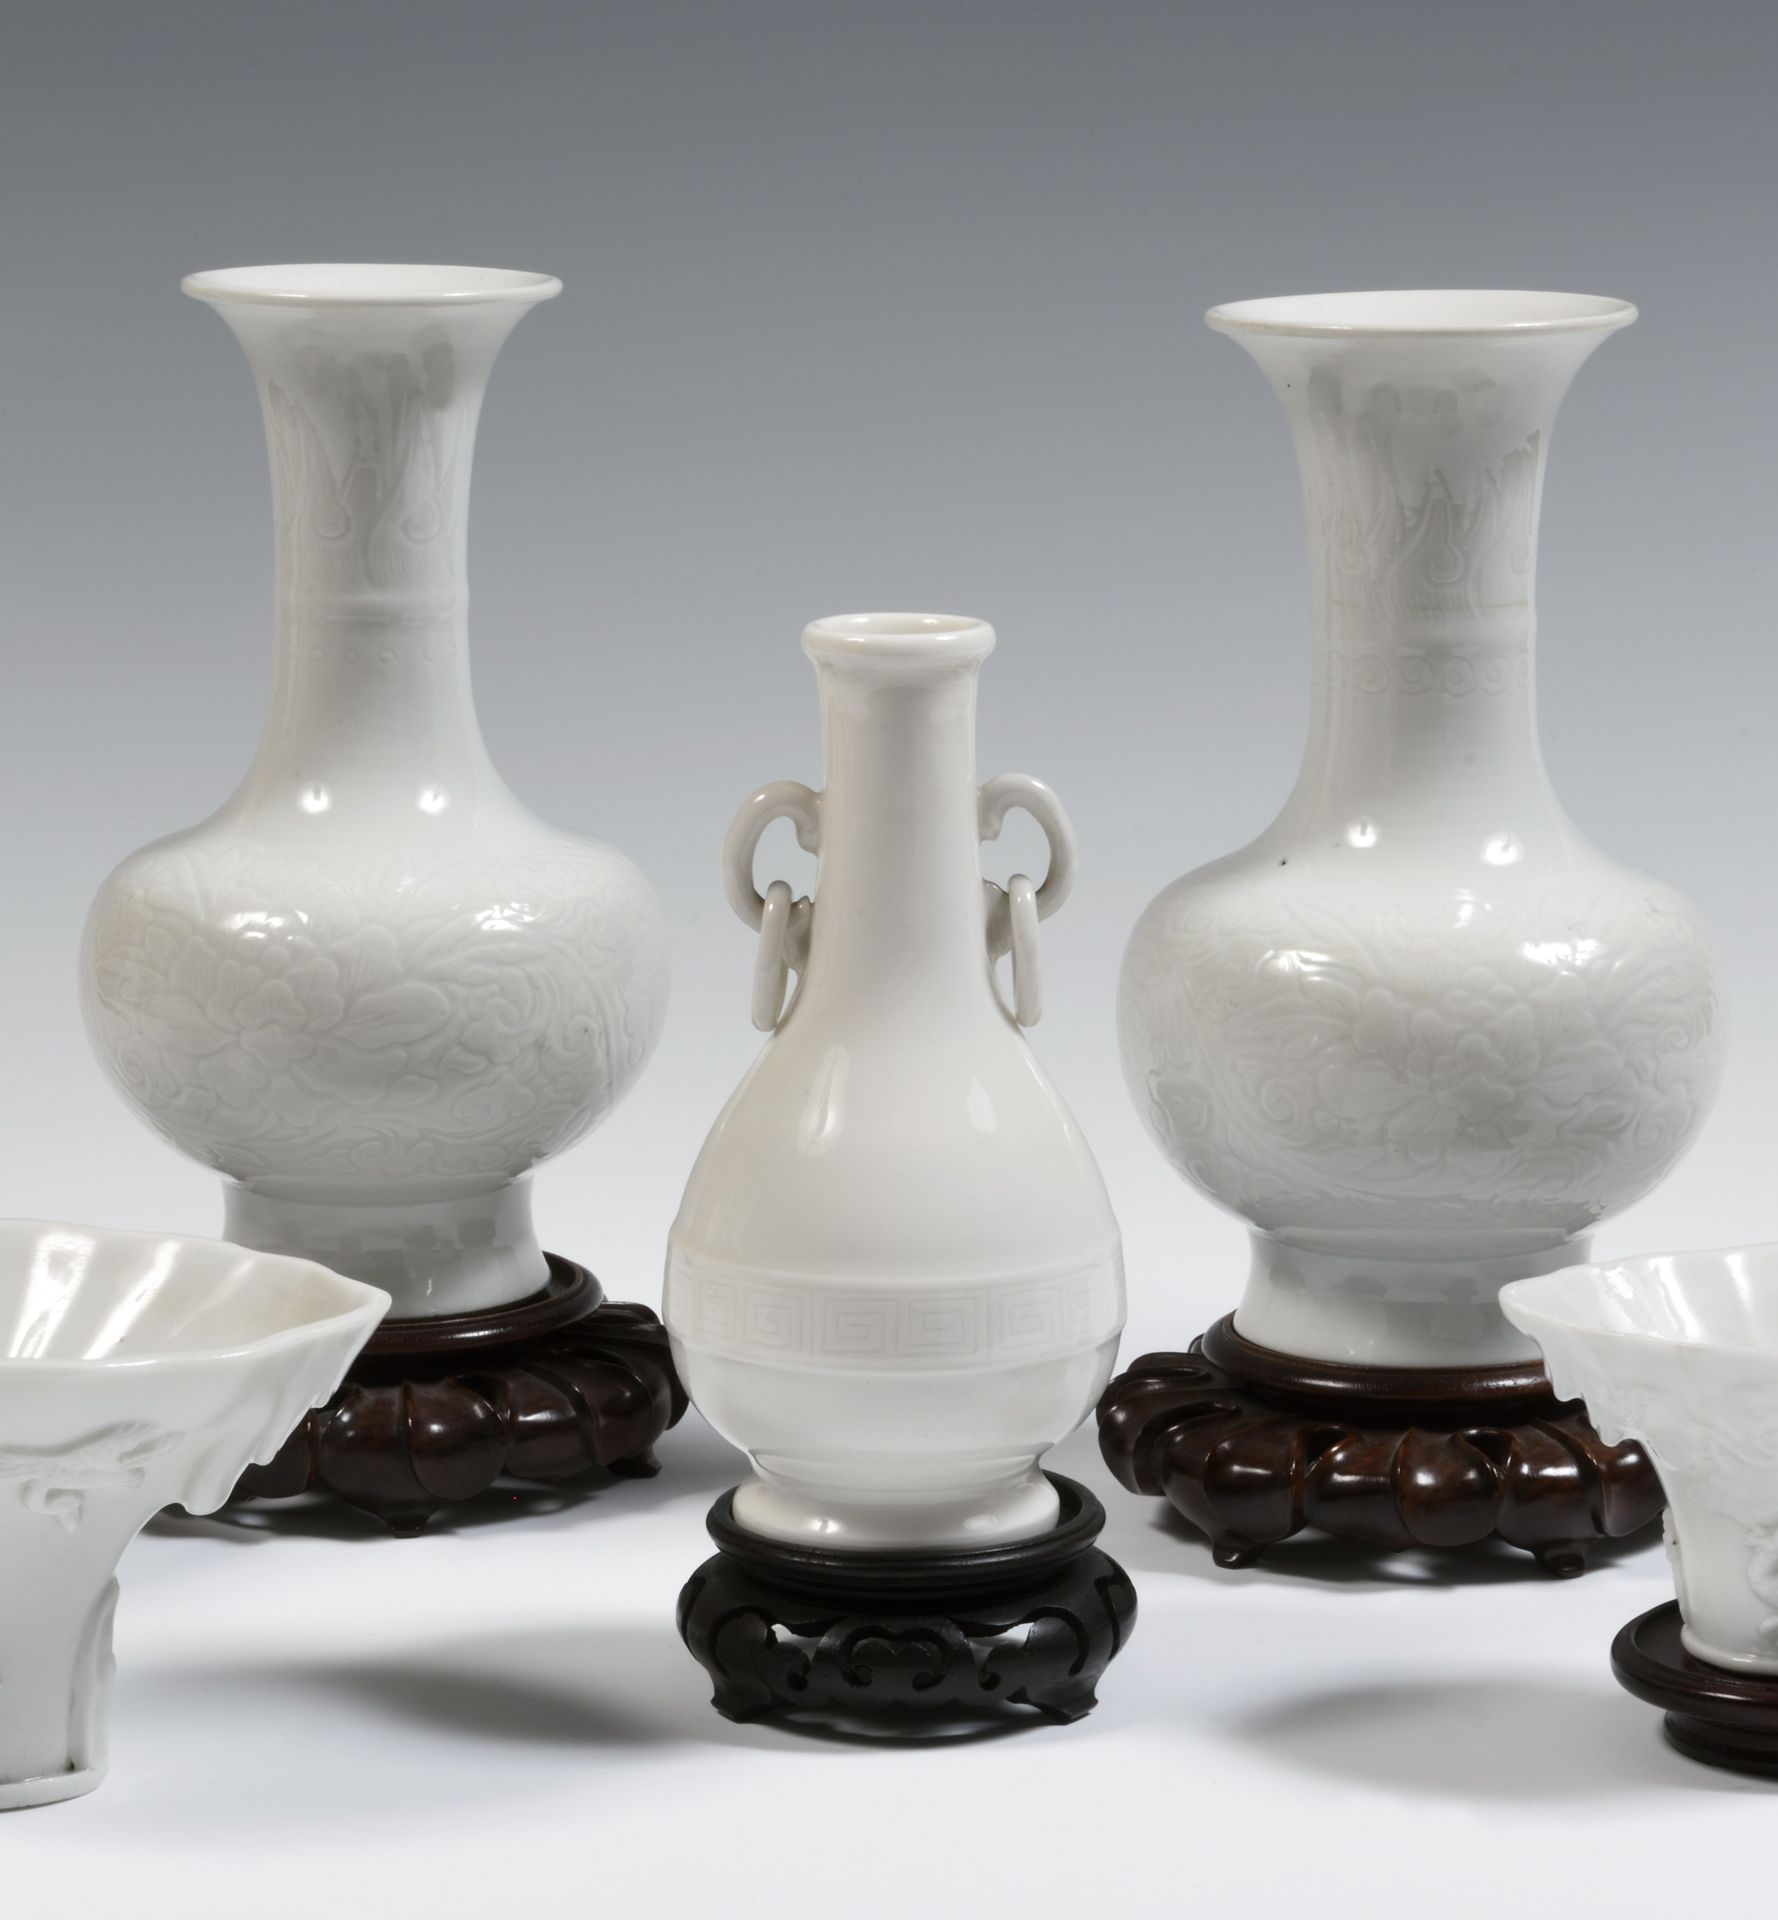 Null 
Cina

Un vaso piriforme in porcellana bianca cinese, con due manici ad ane&hellip;